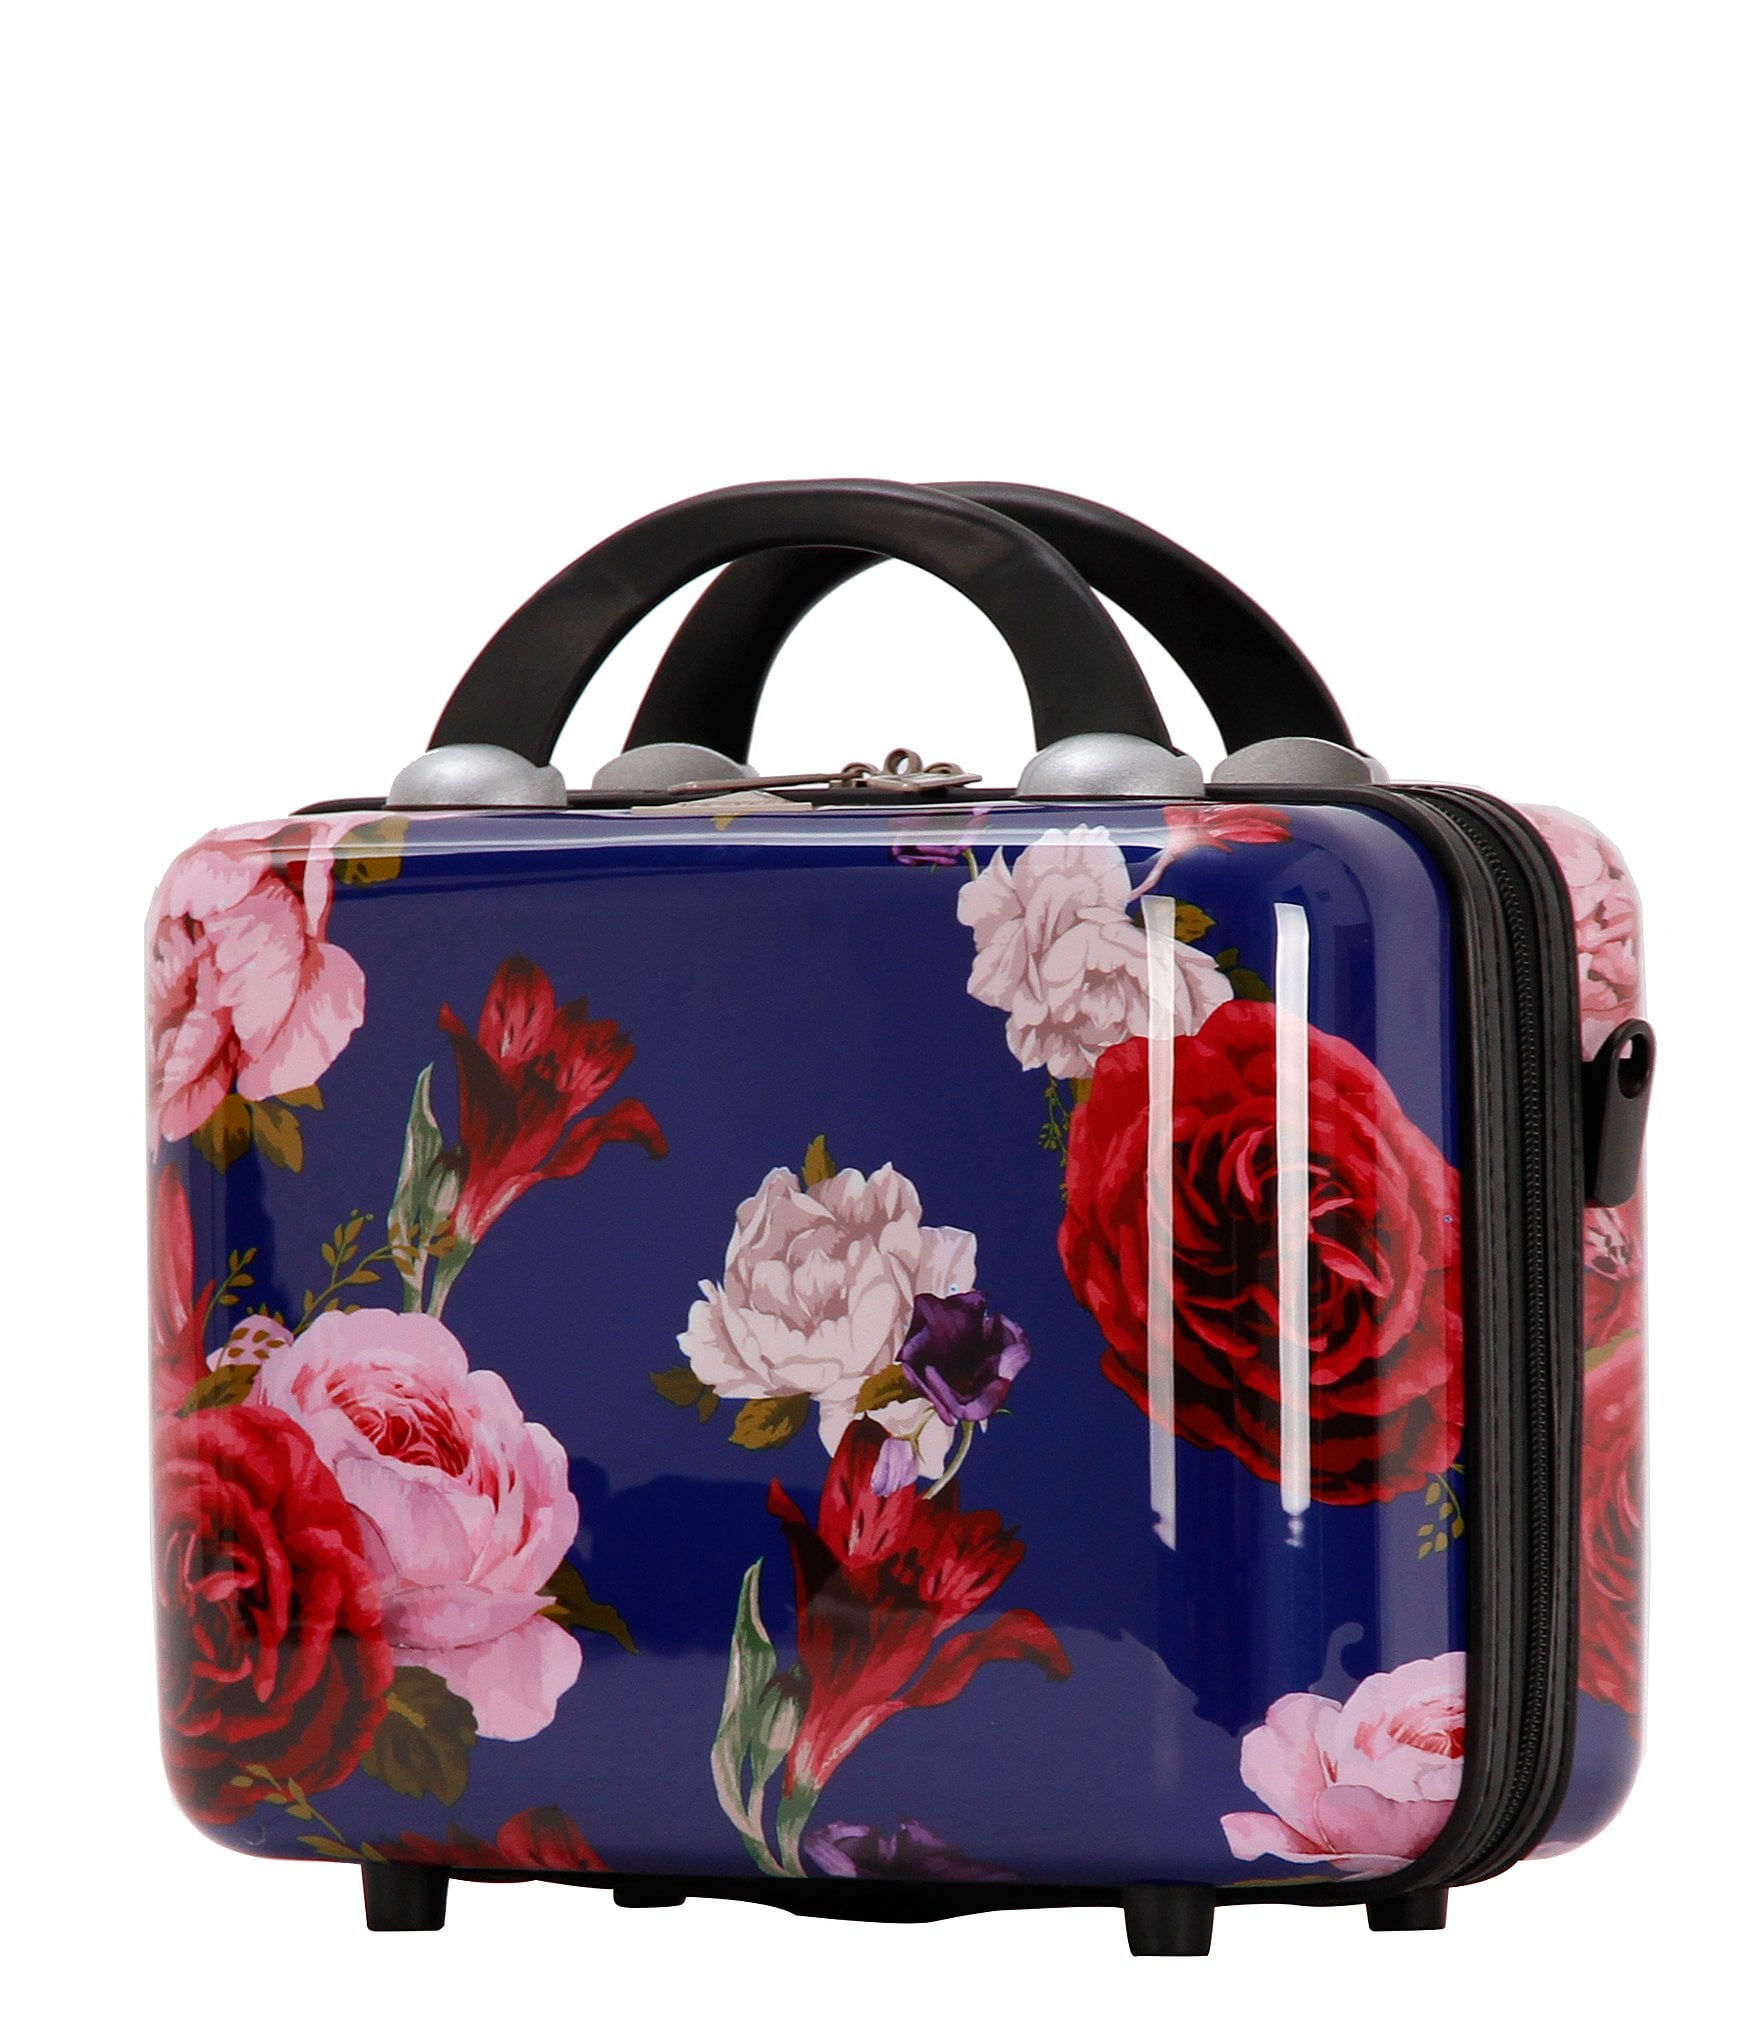 Triforce Versailles Collection Floral Travel Beauty Case | Dillards